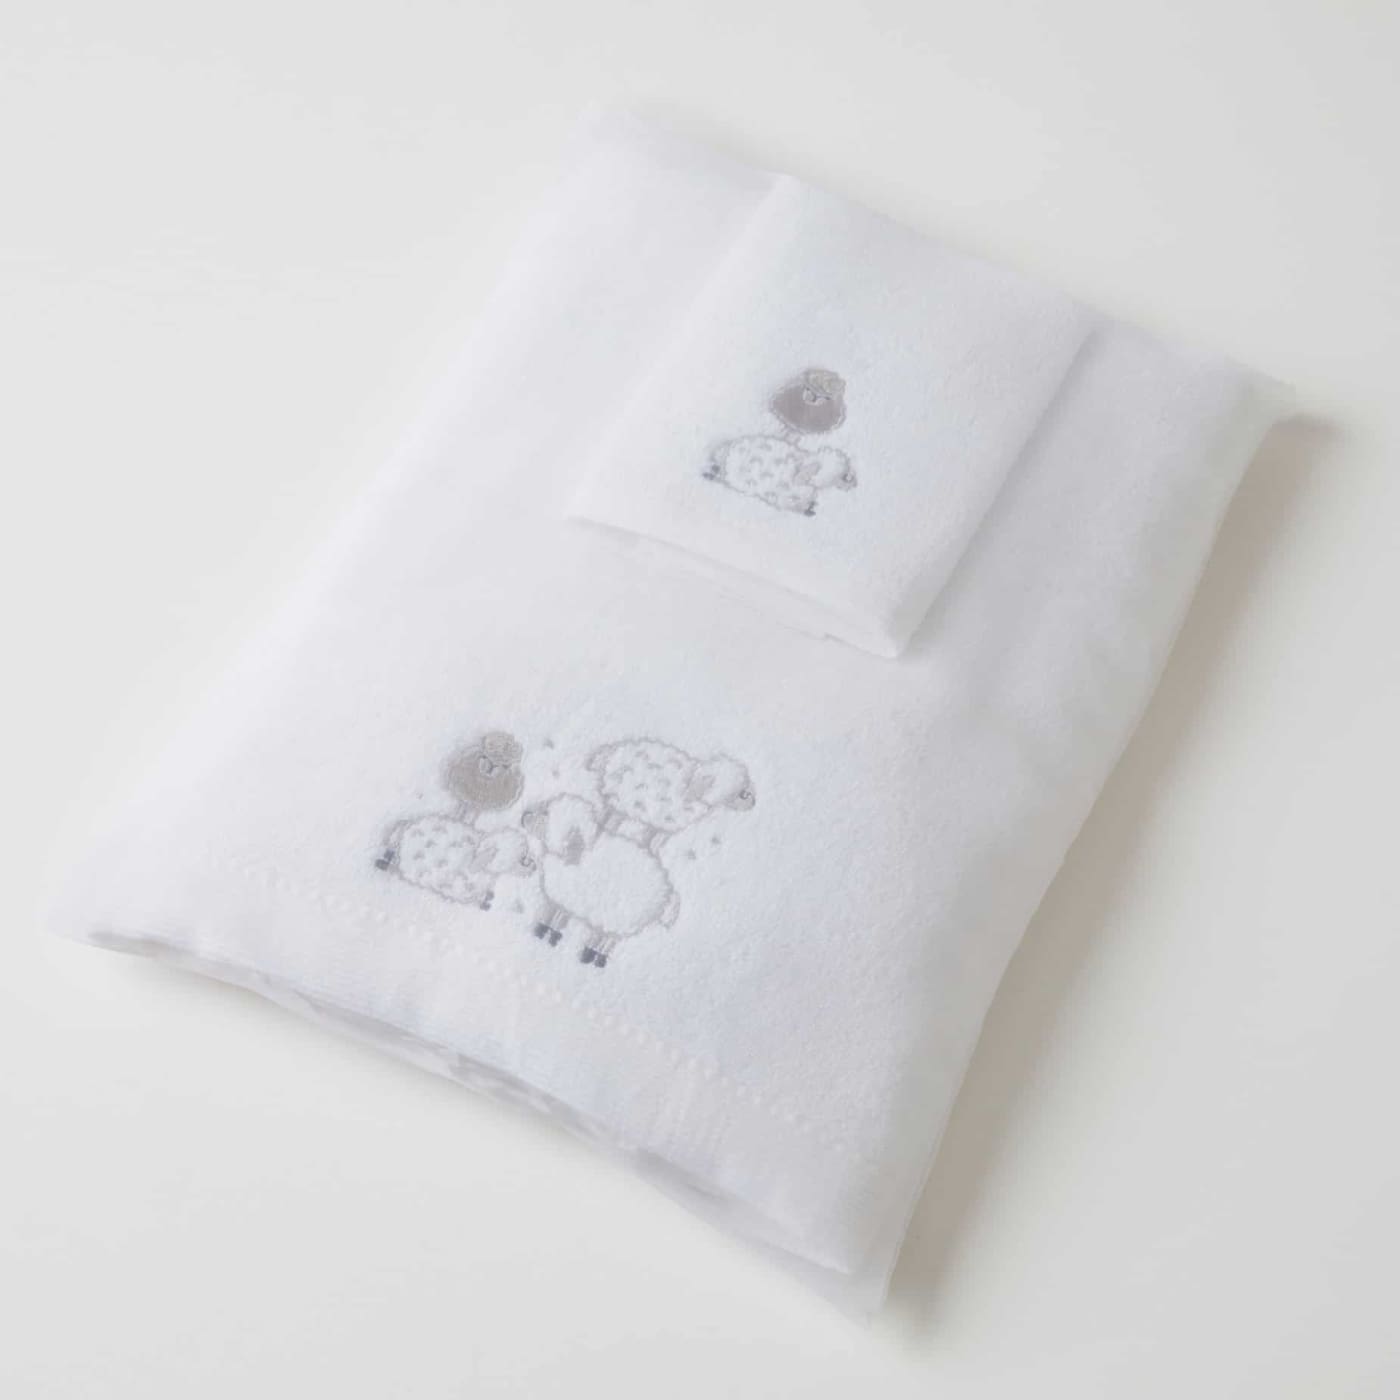 Jiggle & Giggle Towel & Face Washer Set in Organza Bag - Sheep - Sheep - BATHTIME & CHANGING - TOWELS/WASHERS